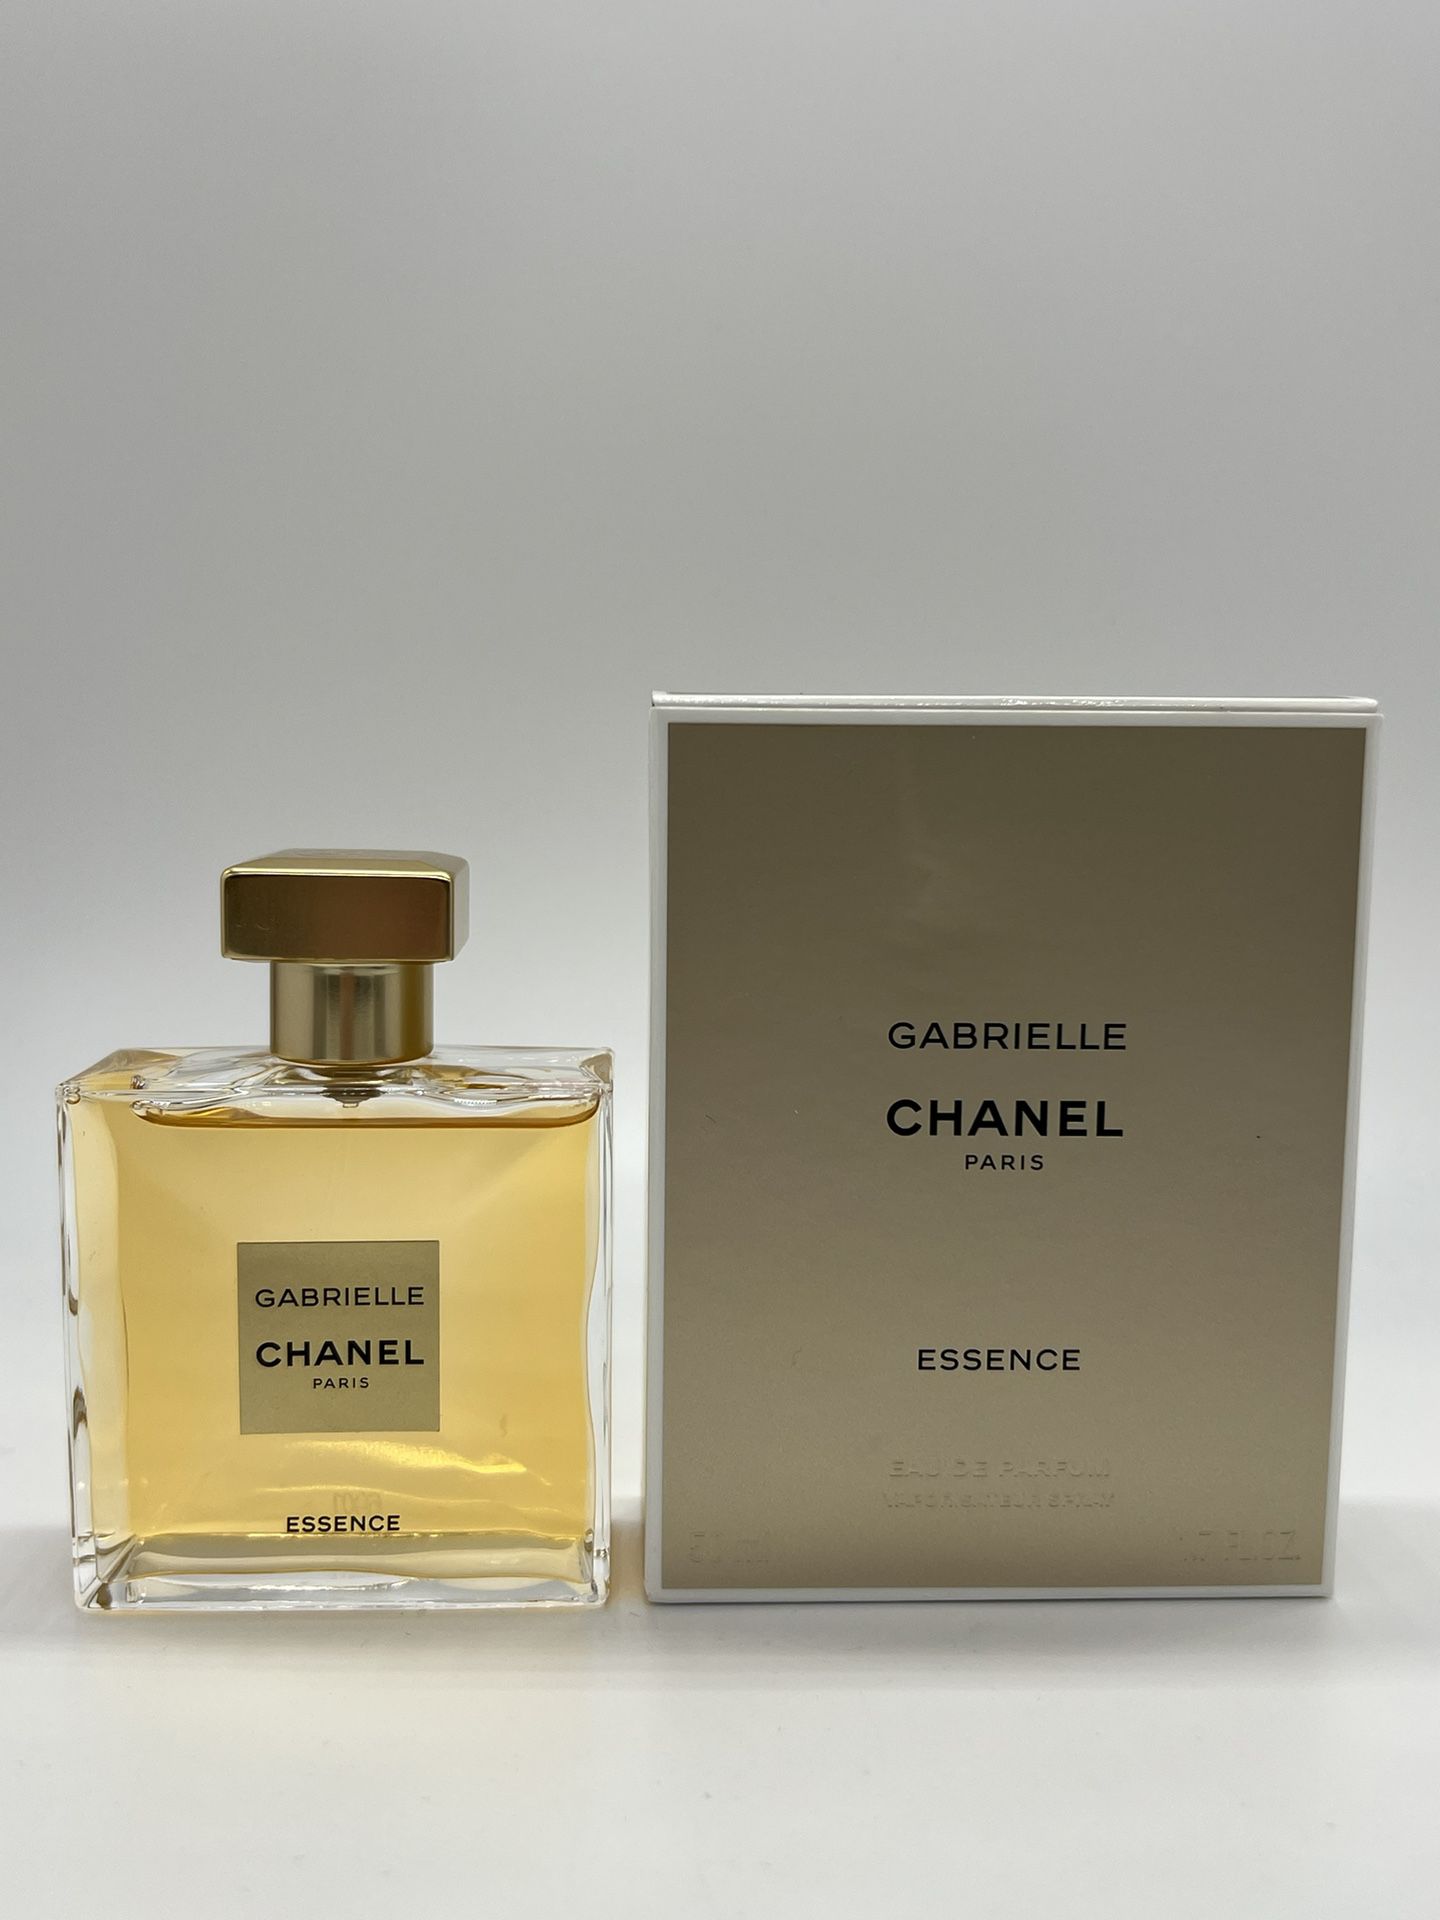 CHANEL Gabrielle Essence 1.7 fl. oz. Eau de Parfum Spray for Women